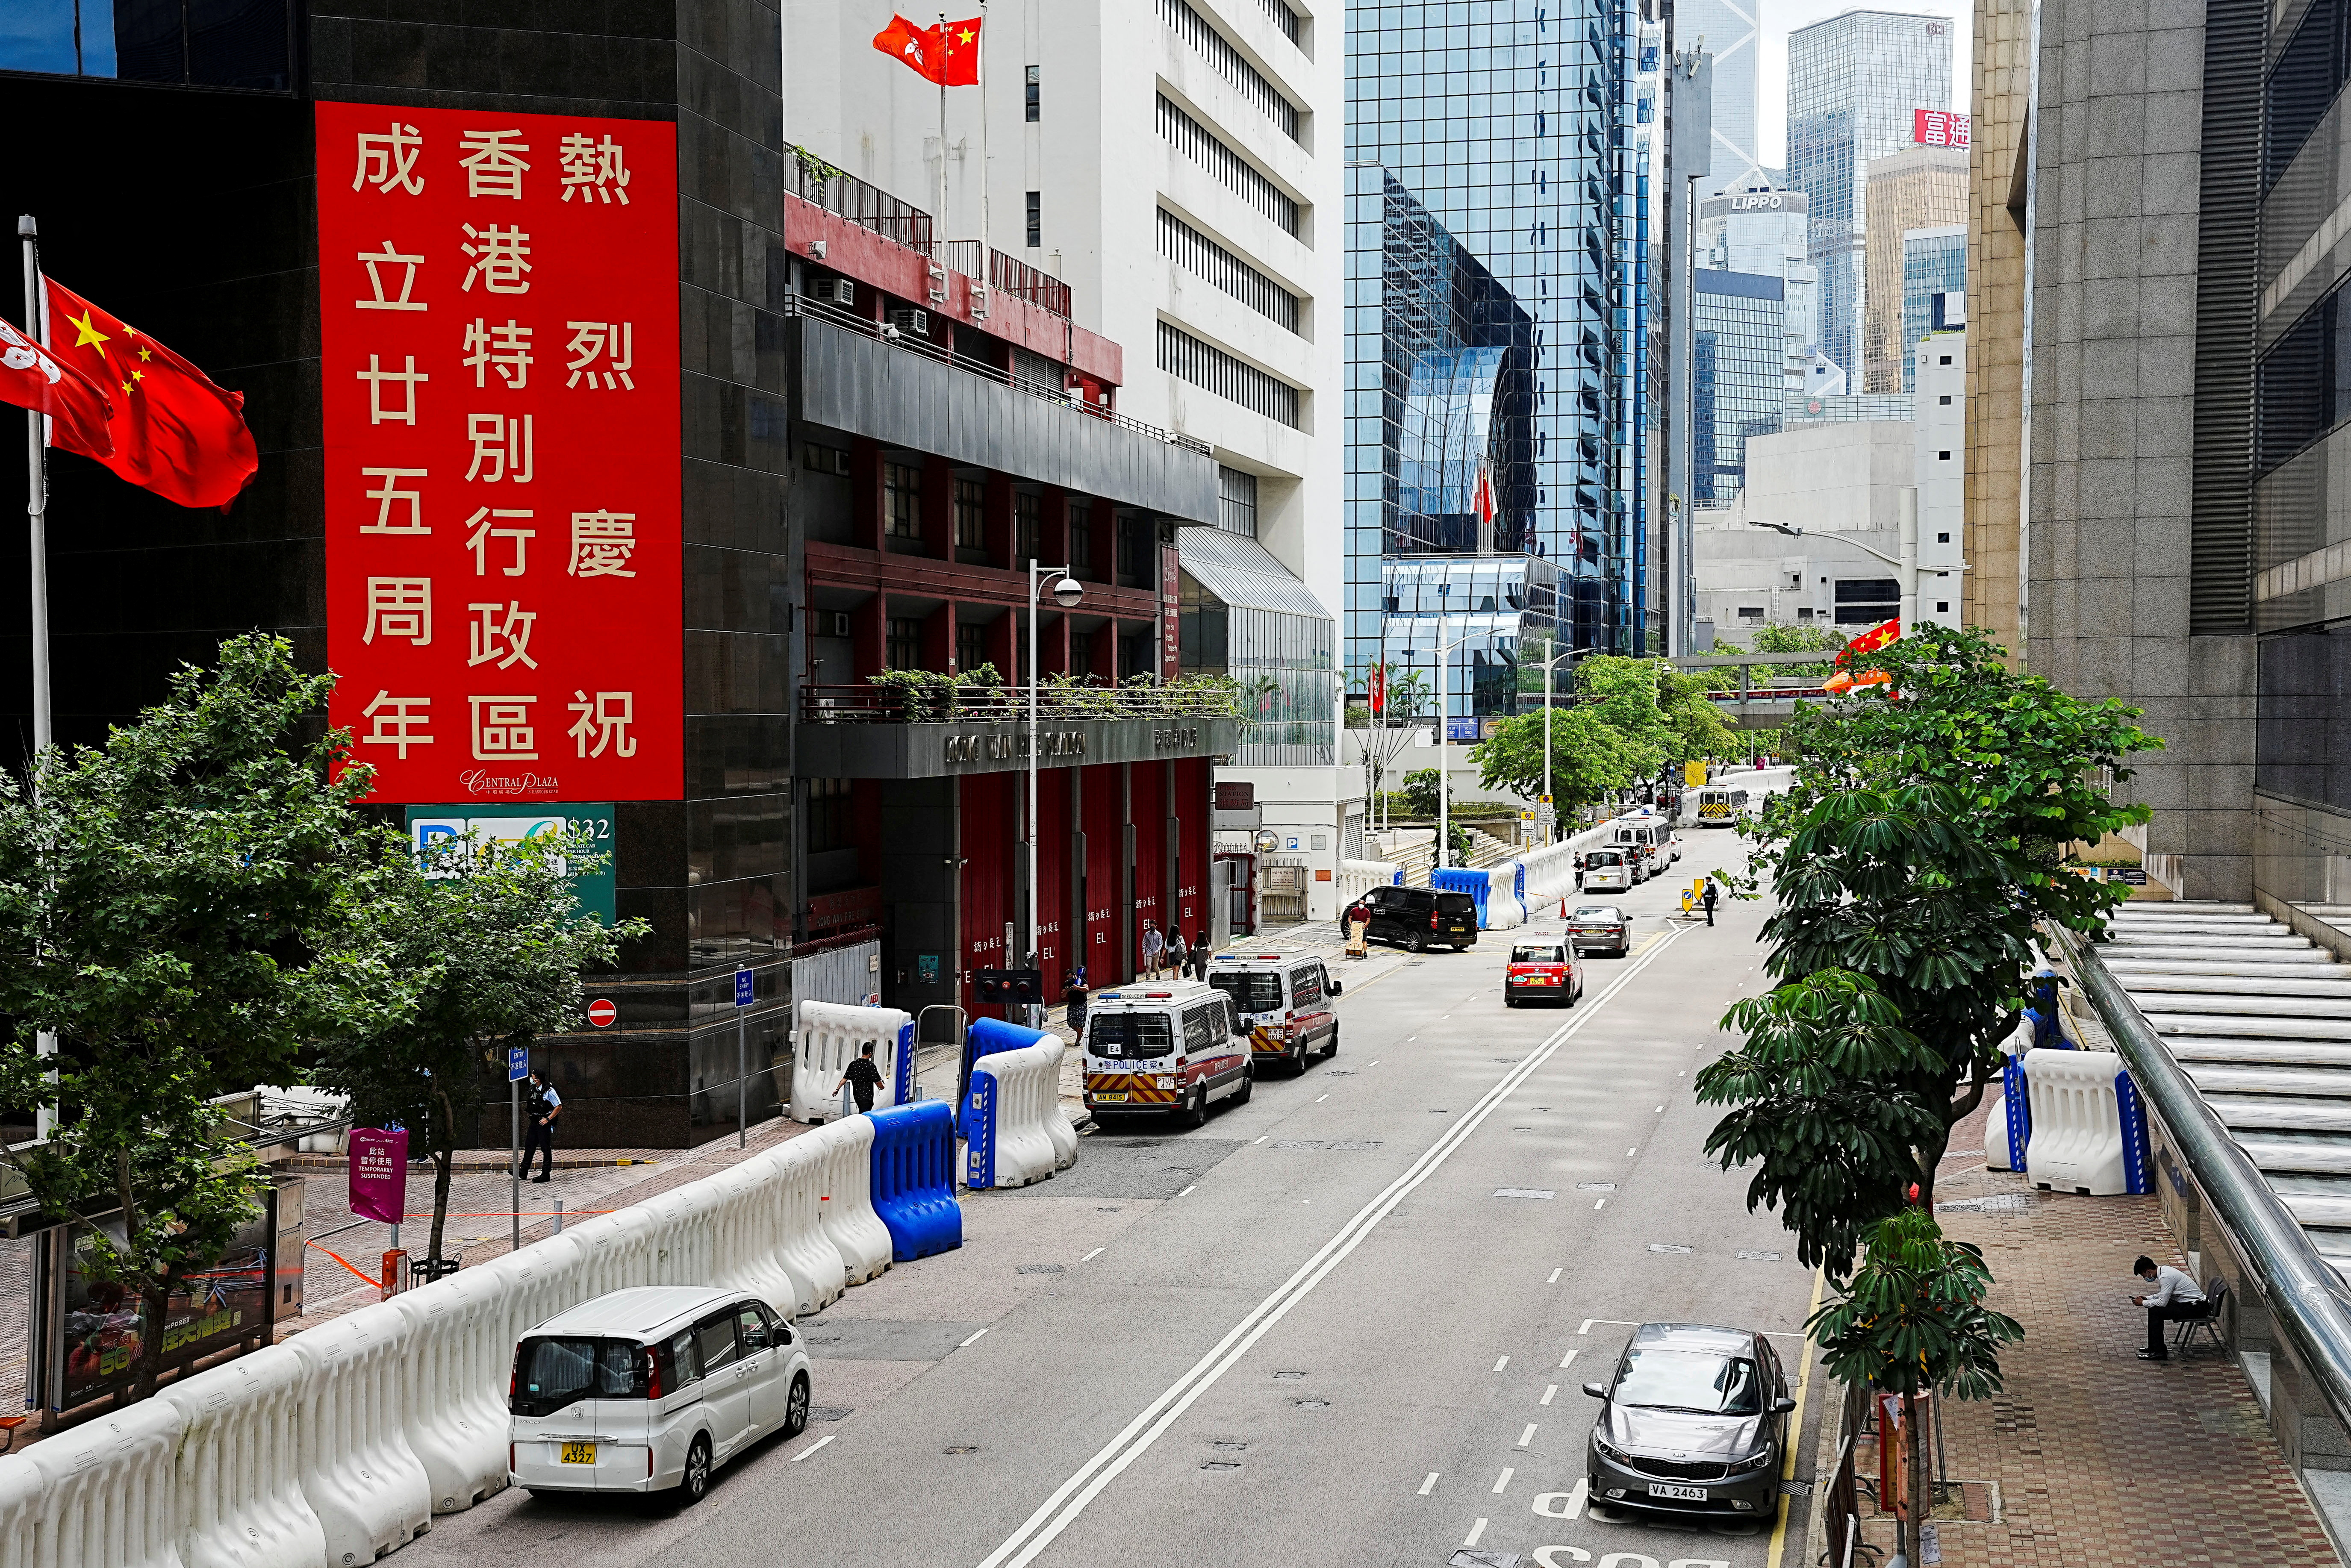 Ahead of the 25th anniversary of Hong Kong's handover to China from Britain, in Hong Kong